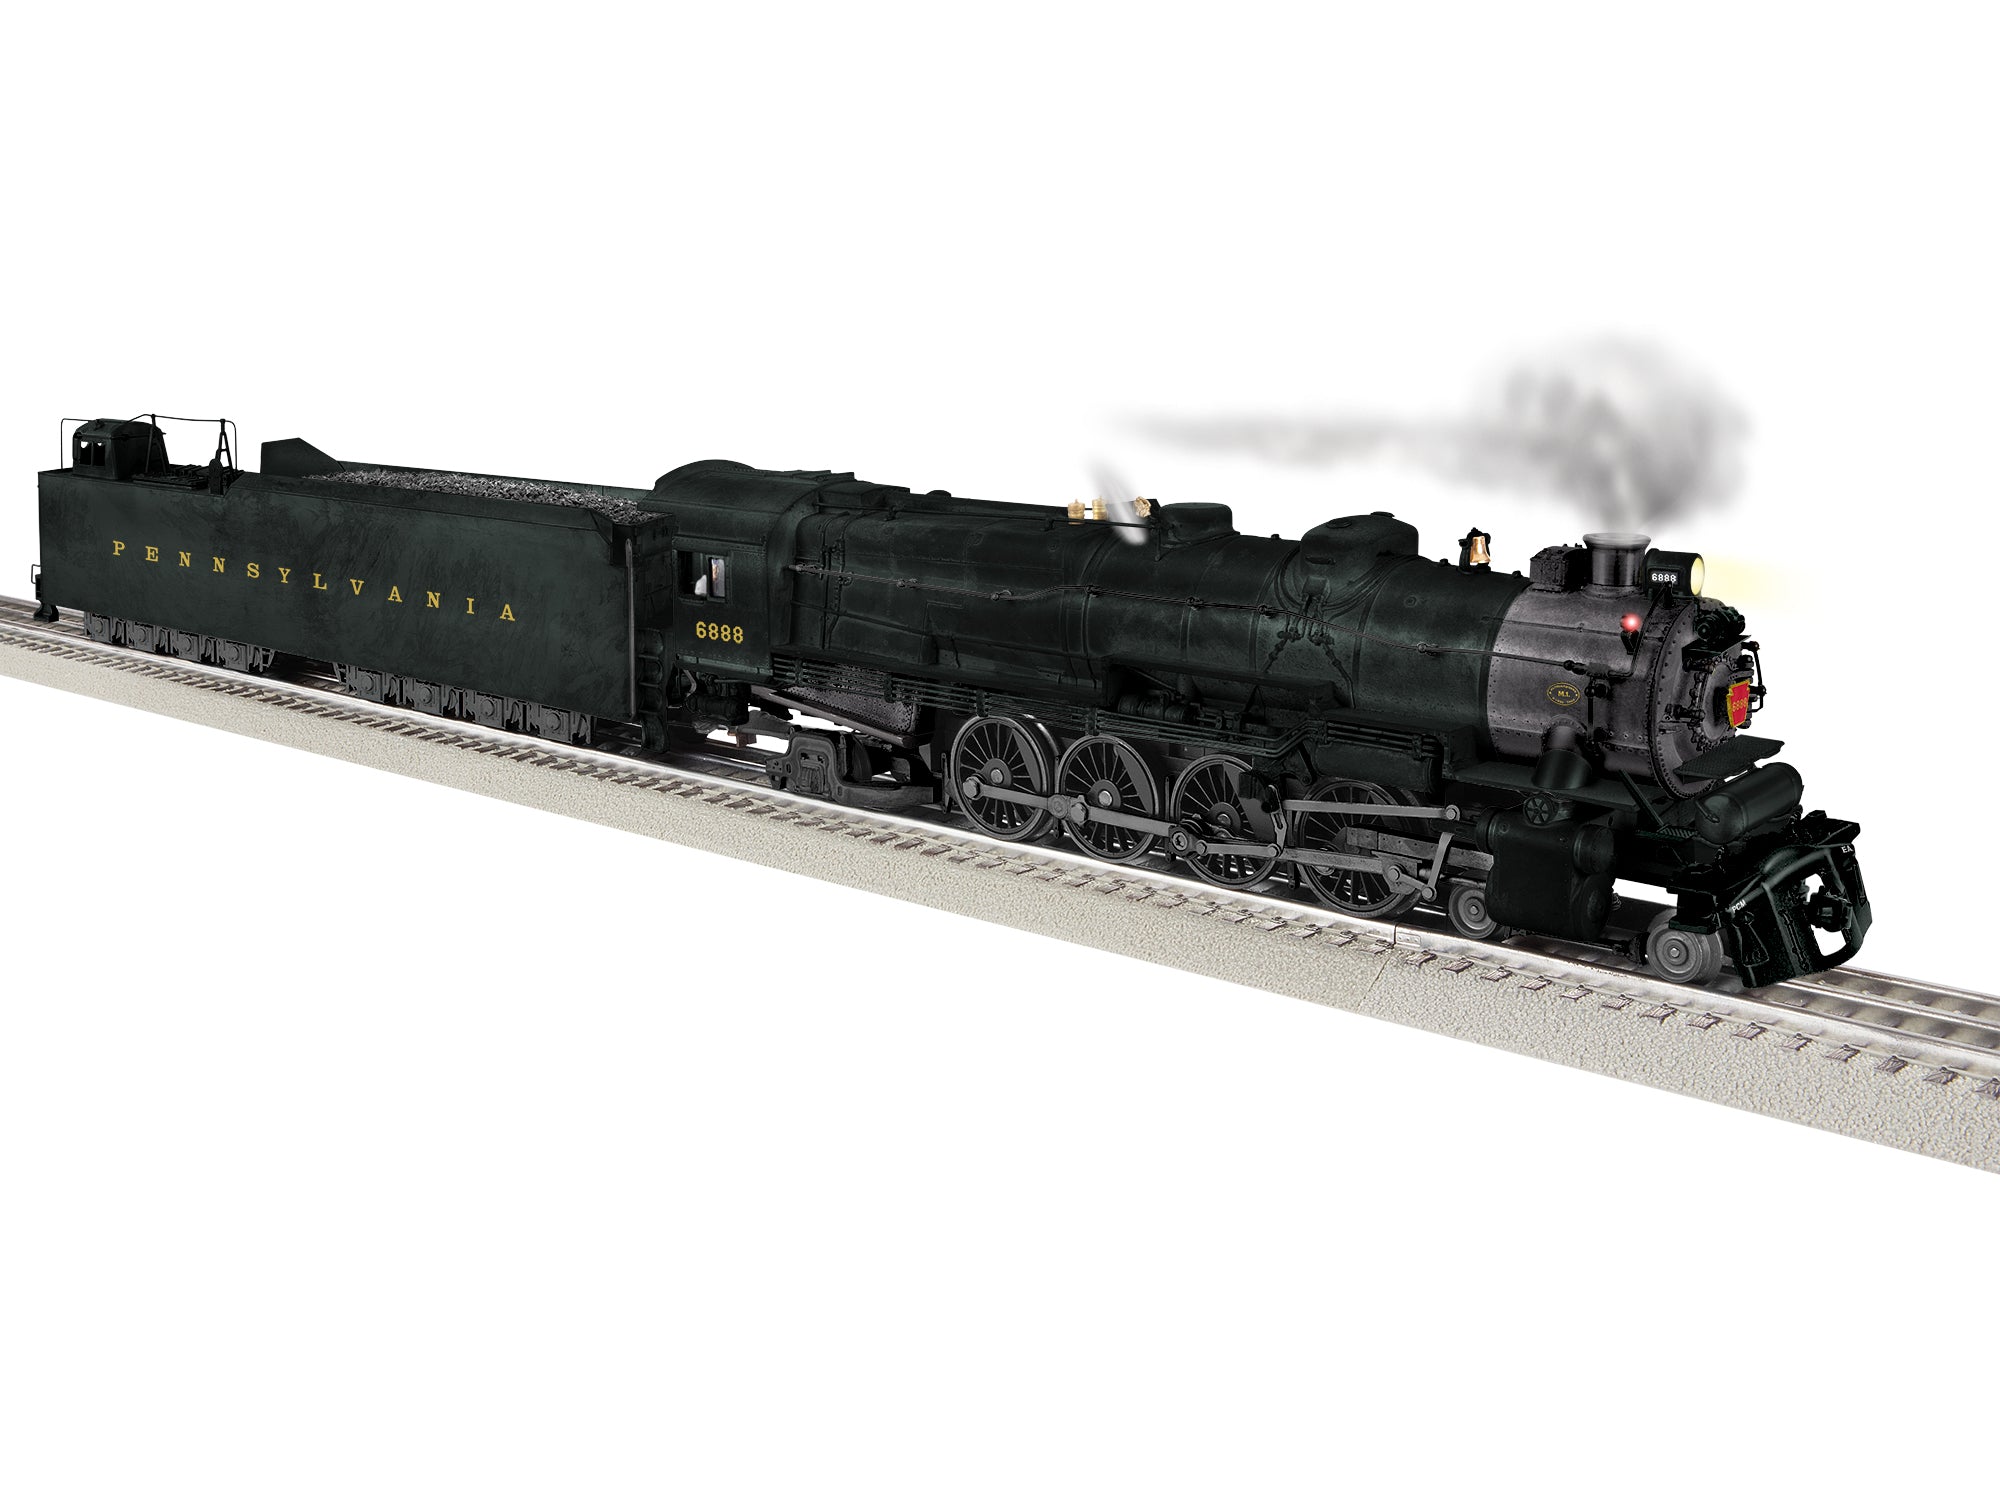 Lionel 2431450 - Legacy M1 Mountain Steam Engine "Pennsylvania" #6888 (c. 1955)